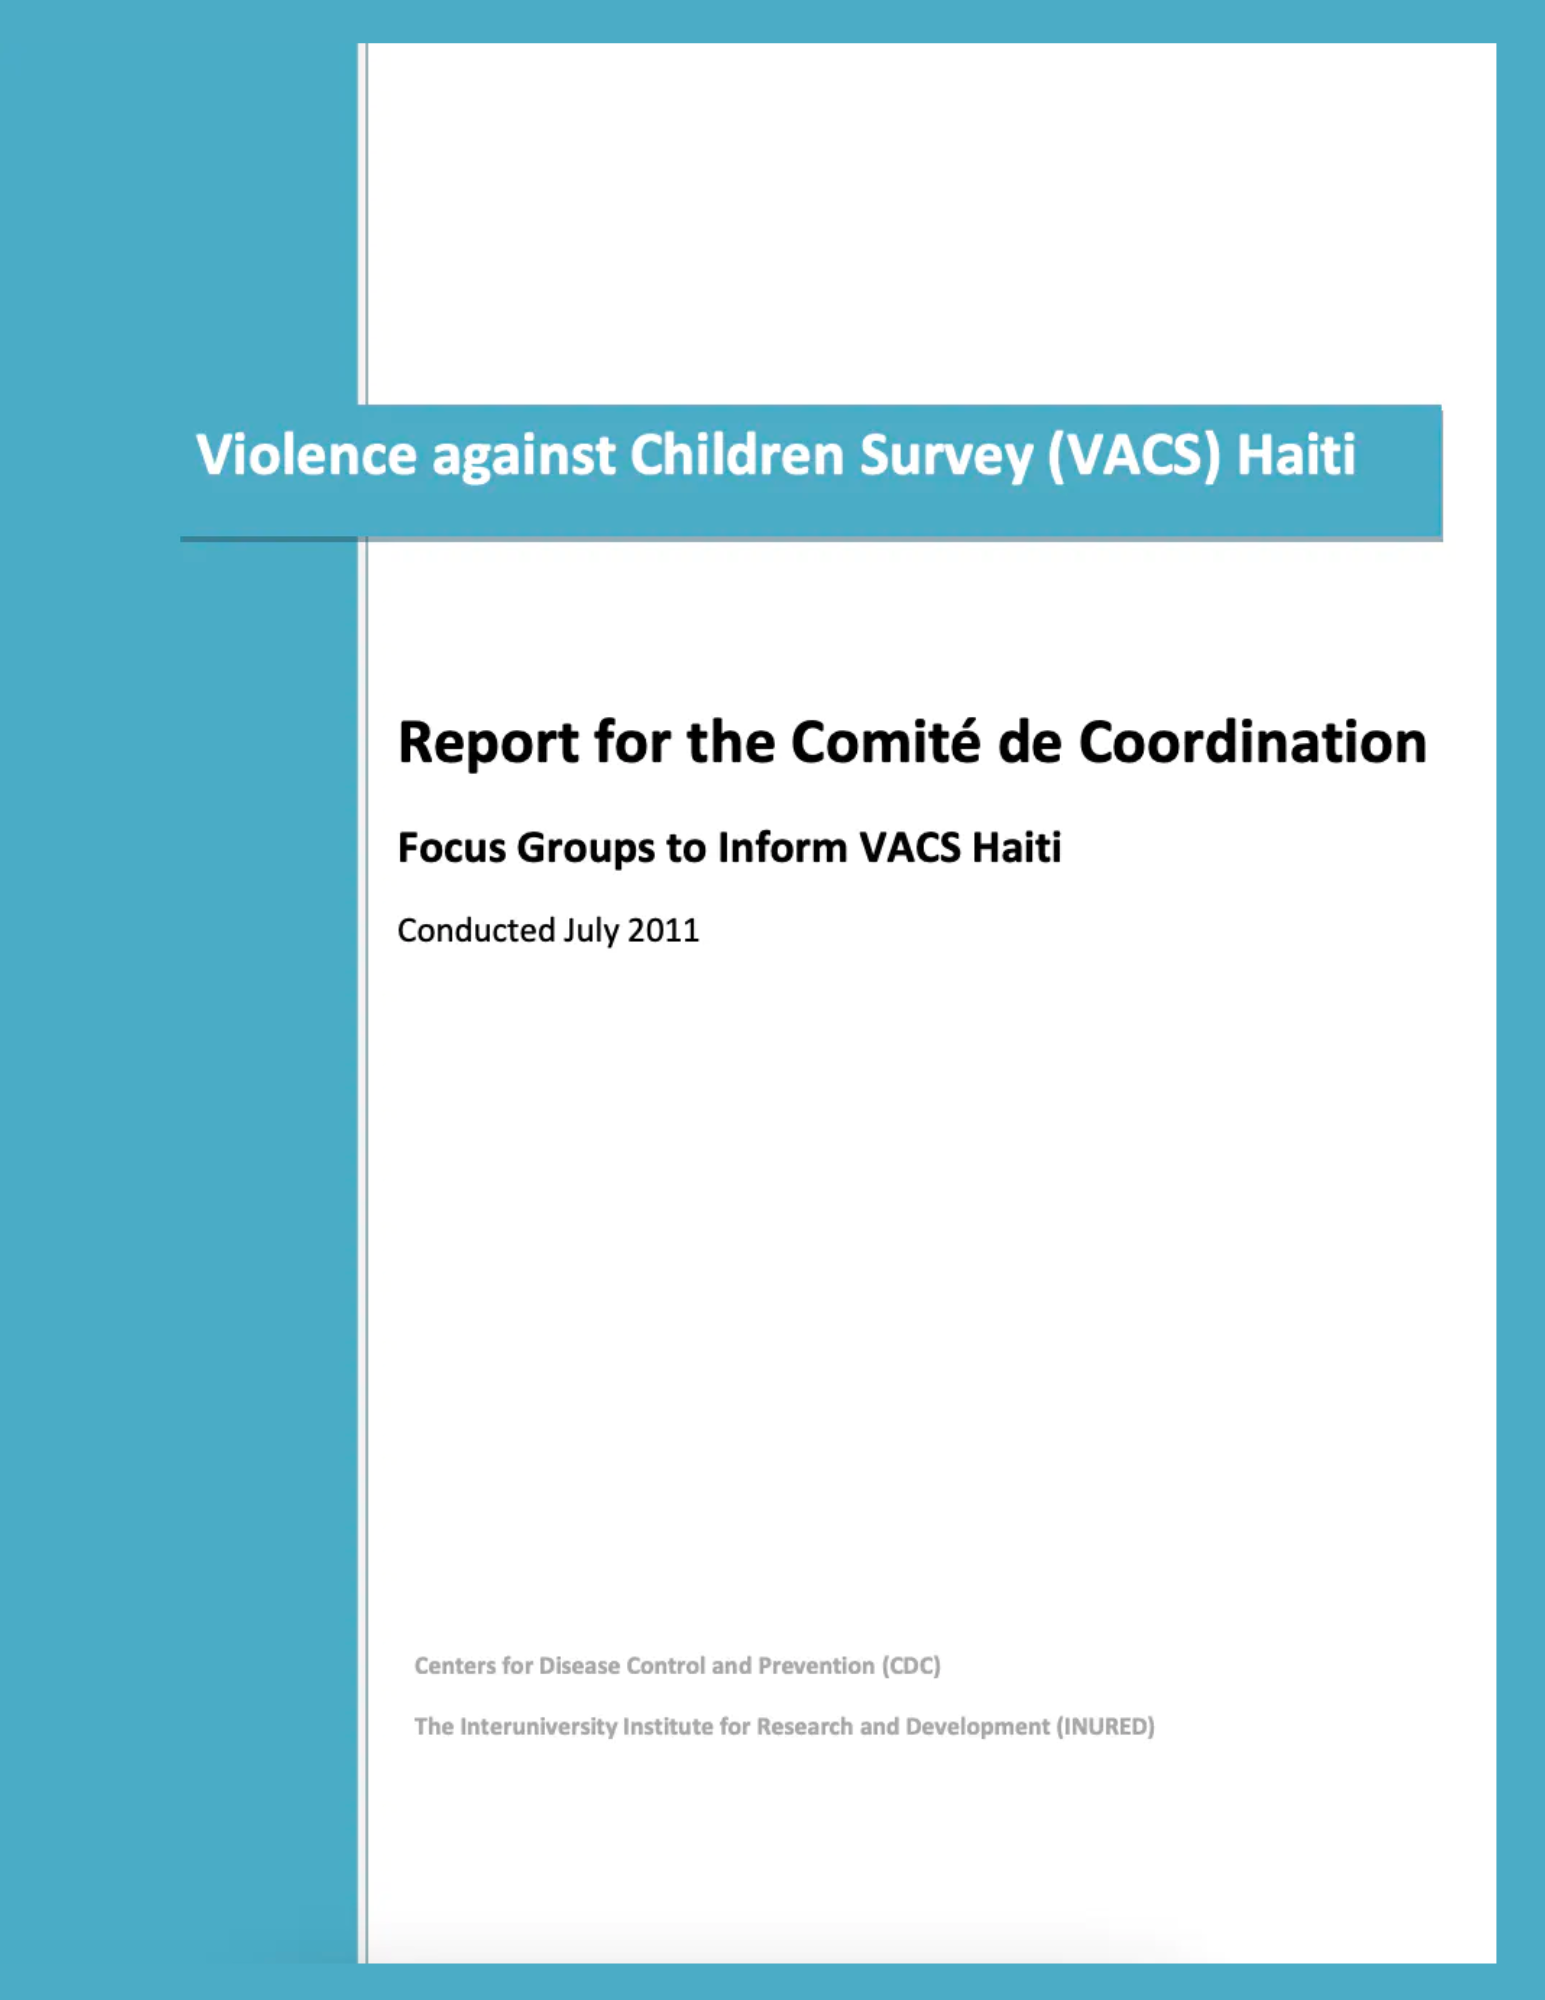 Haiti VACS Qualitative Report